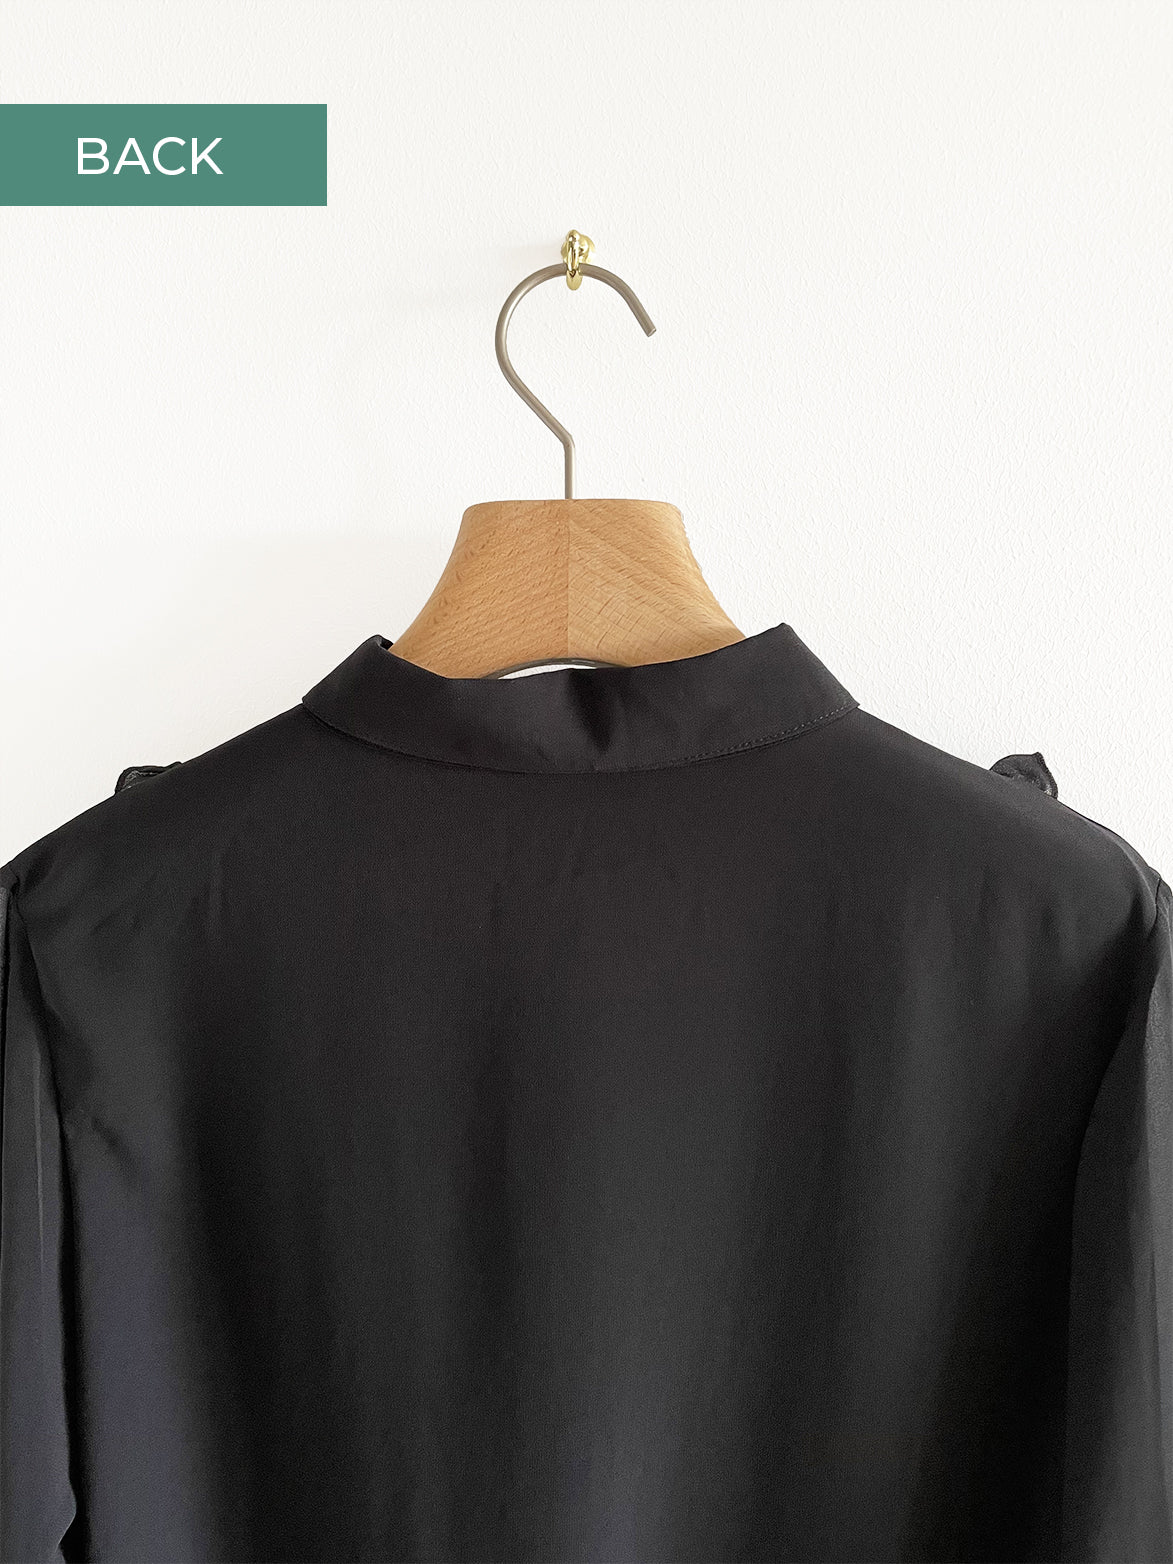 Black Shirt Dress with Riffle, Size S